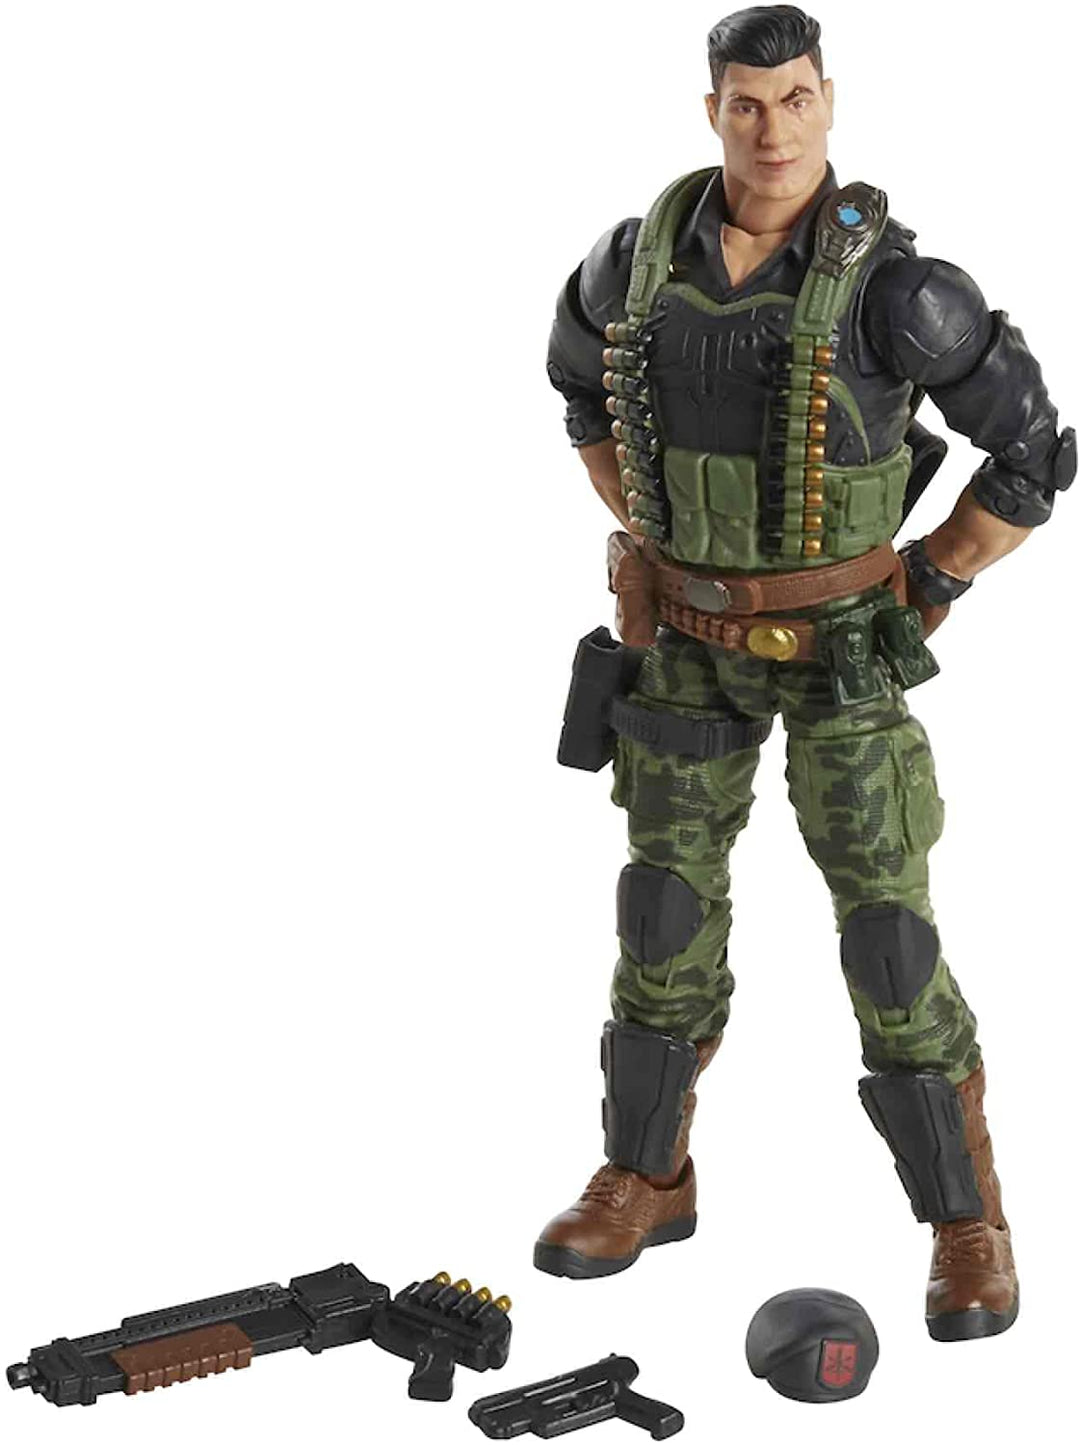 Hasbro G.I. Joe Classified Series Flint 6" Action Figure with accessories